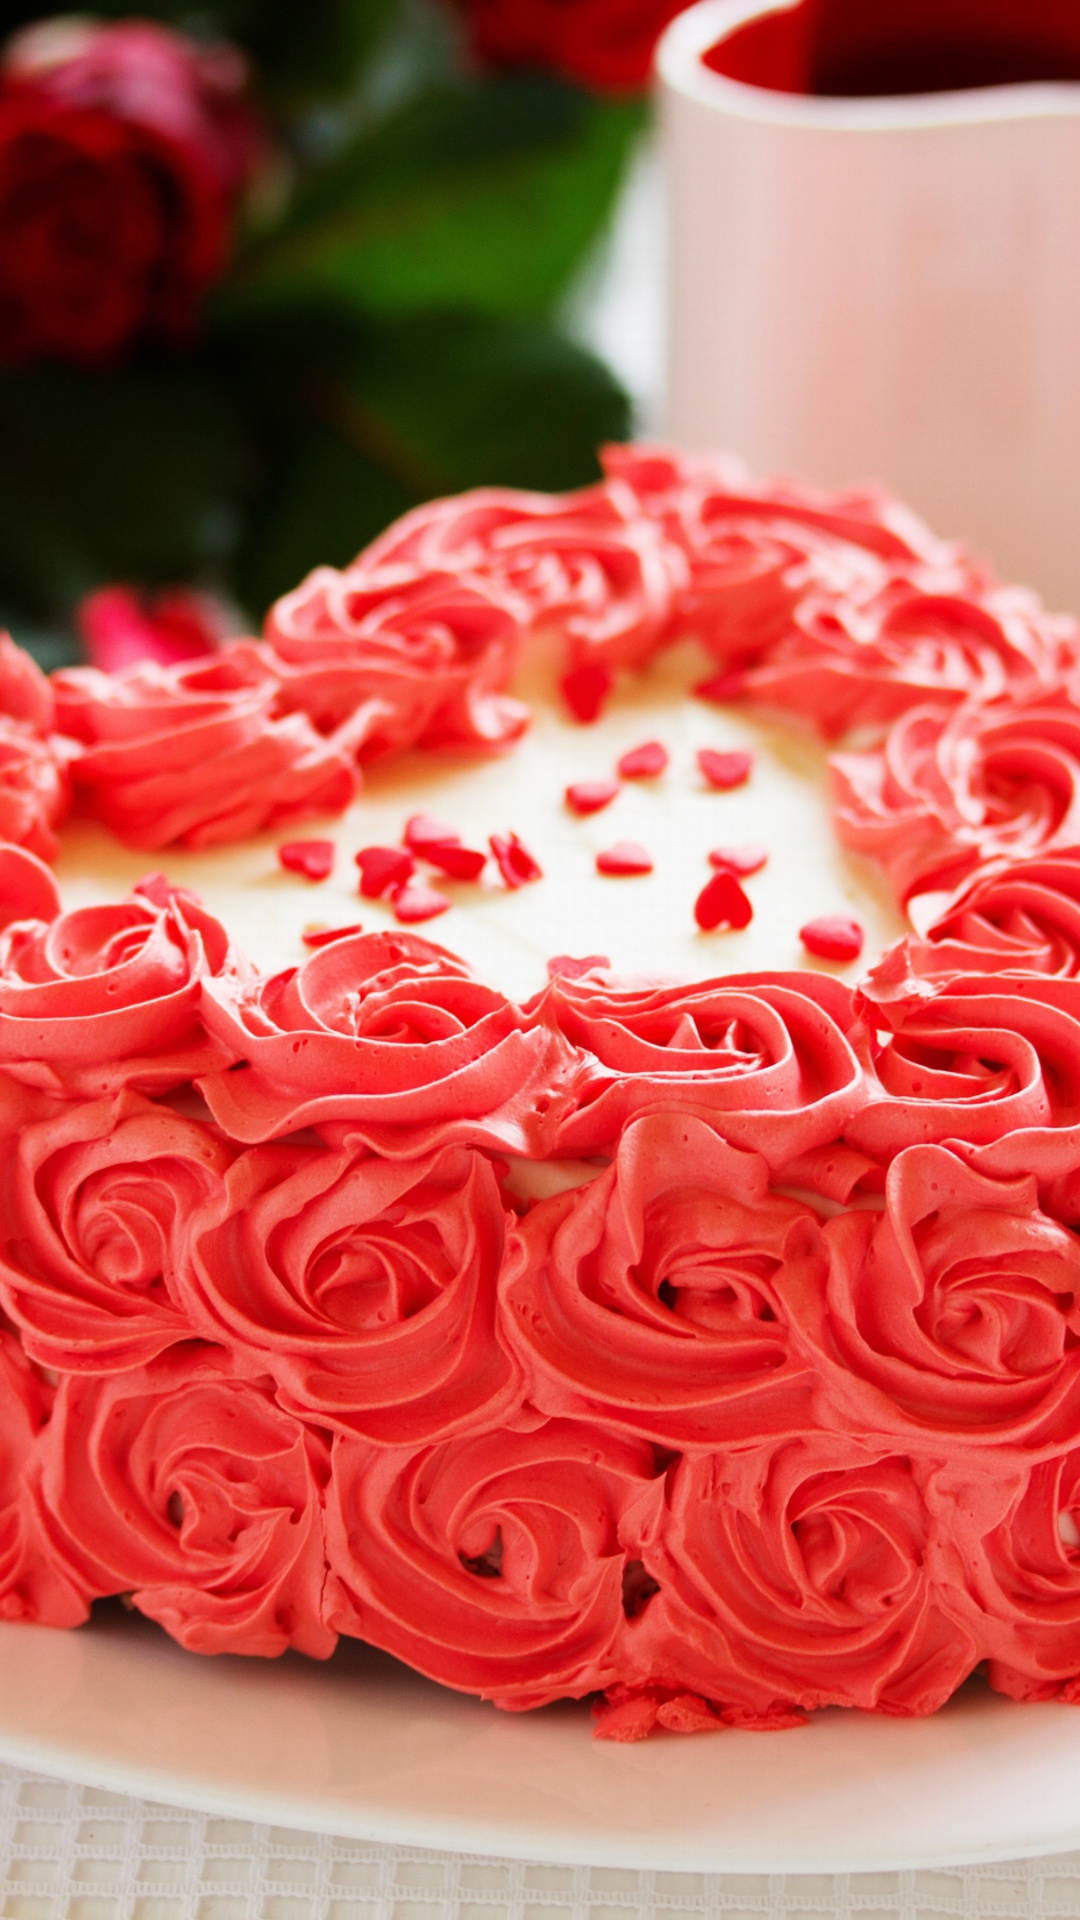 Sweet Red Heart Cake wallpaper 1080x1920